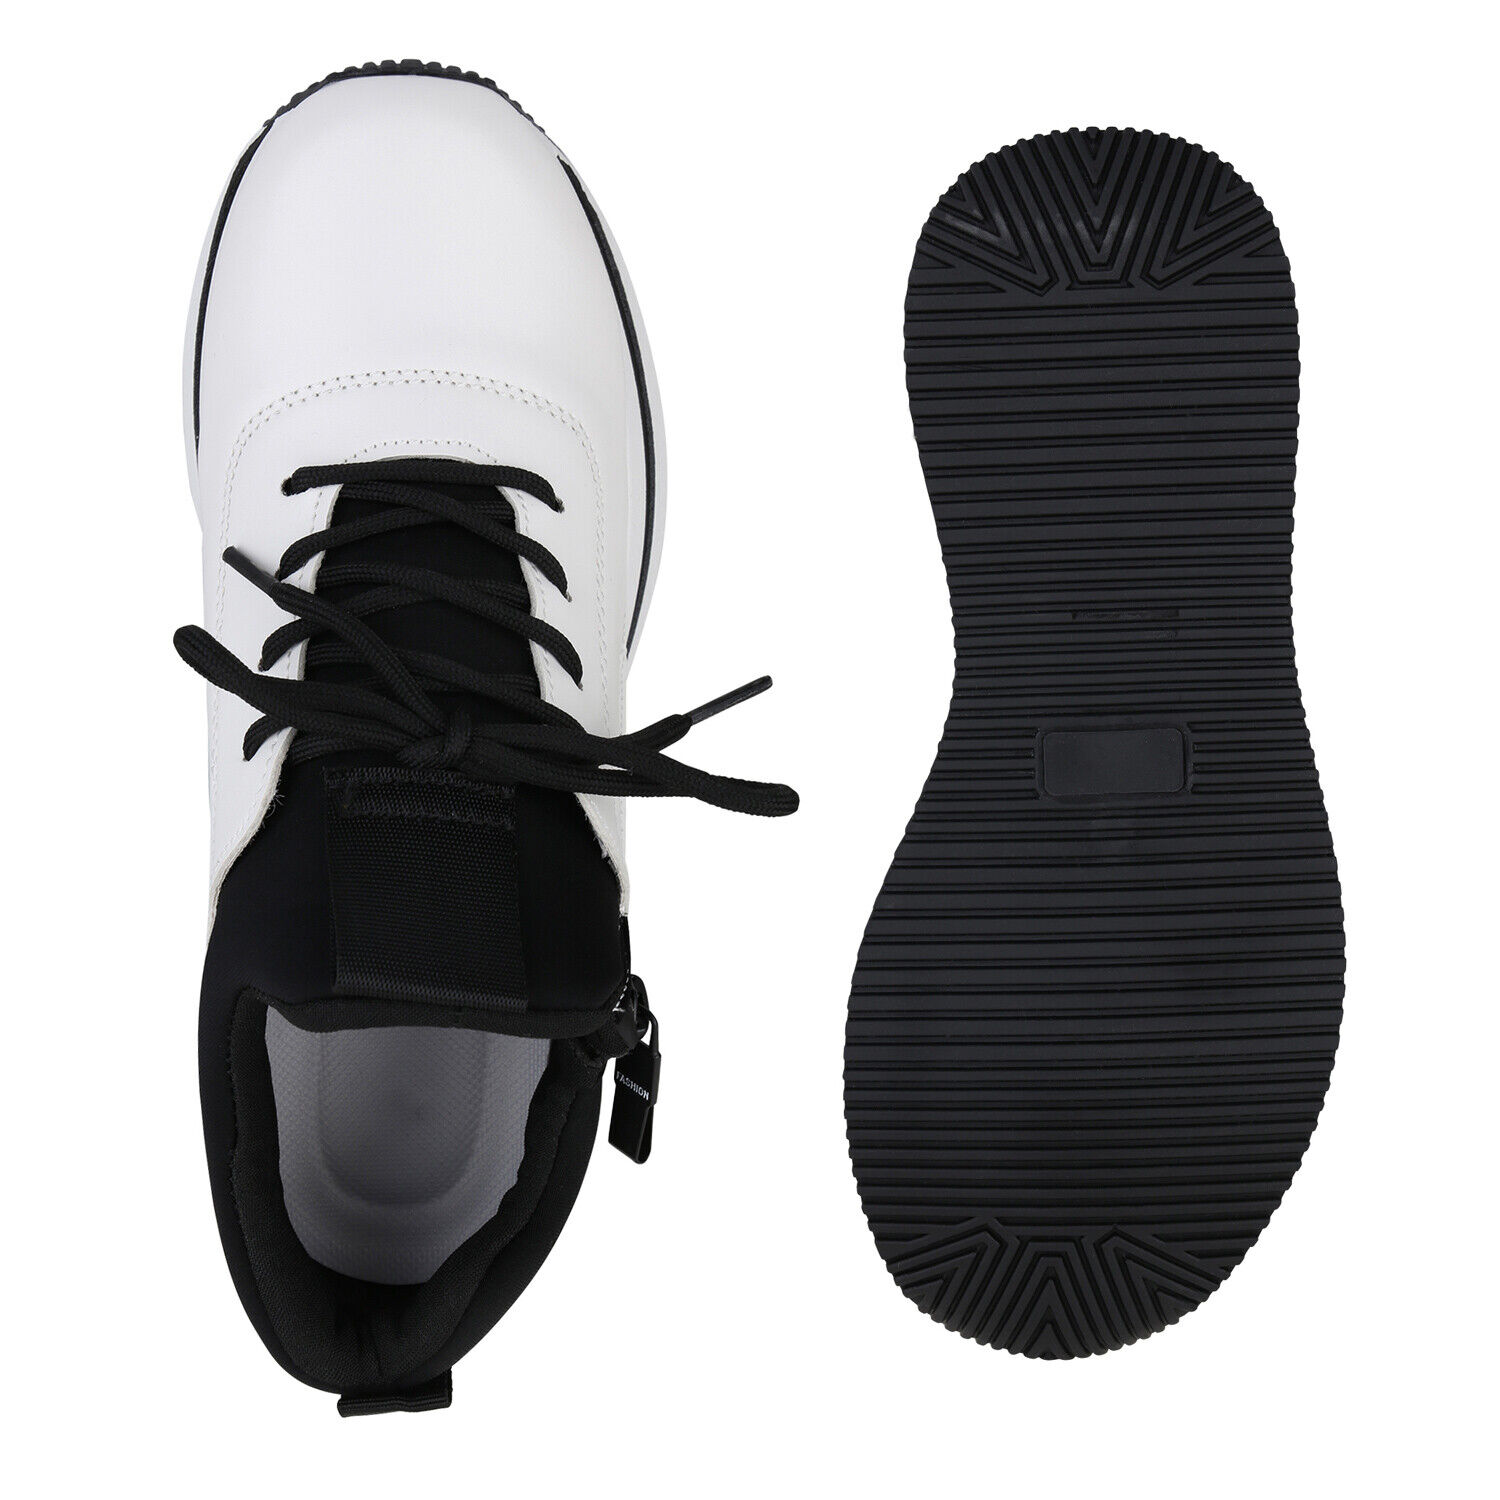 Damen Sneaker Zipper Schnürer Prints Profil-Sohle Schuhe 840982 Trendy Neu